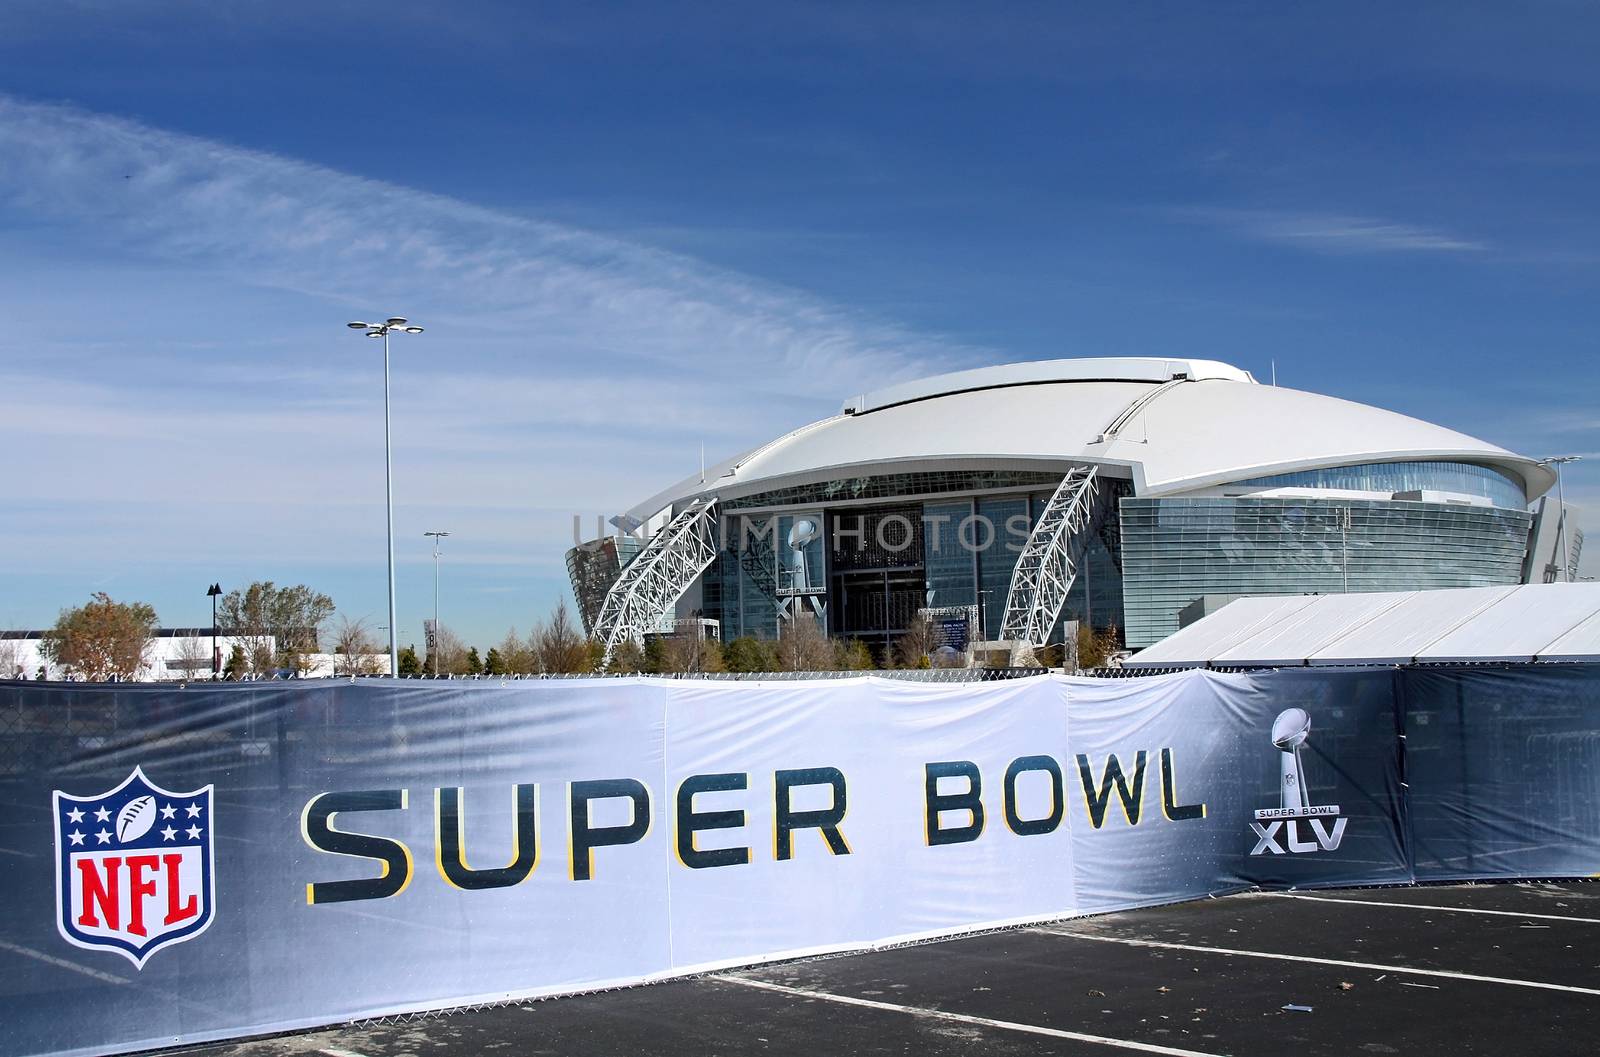 ARLINGTON - JAN 26: A view of Cowboys Stadium in Arlington, Texas and Super Bowl XLV sign. Taken January 26, 2011 in Arlington, TX.